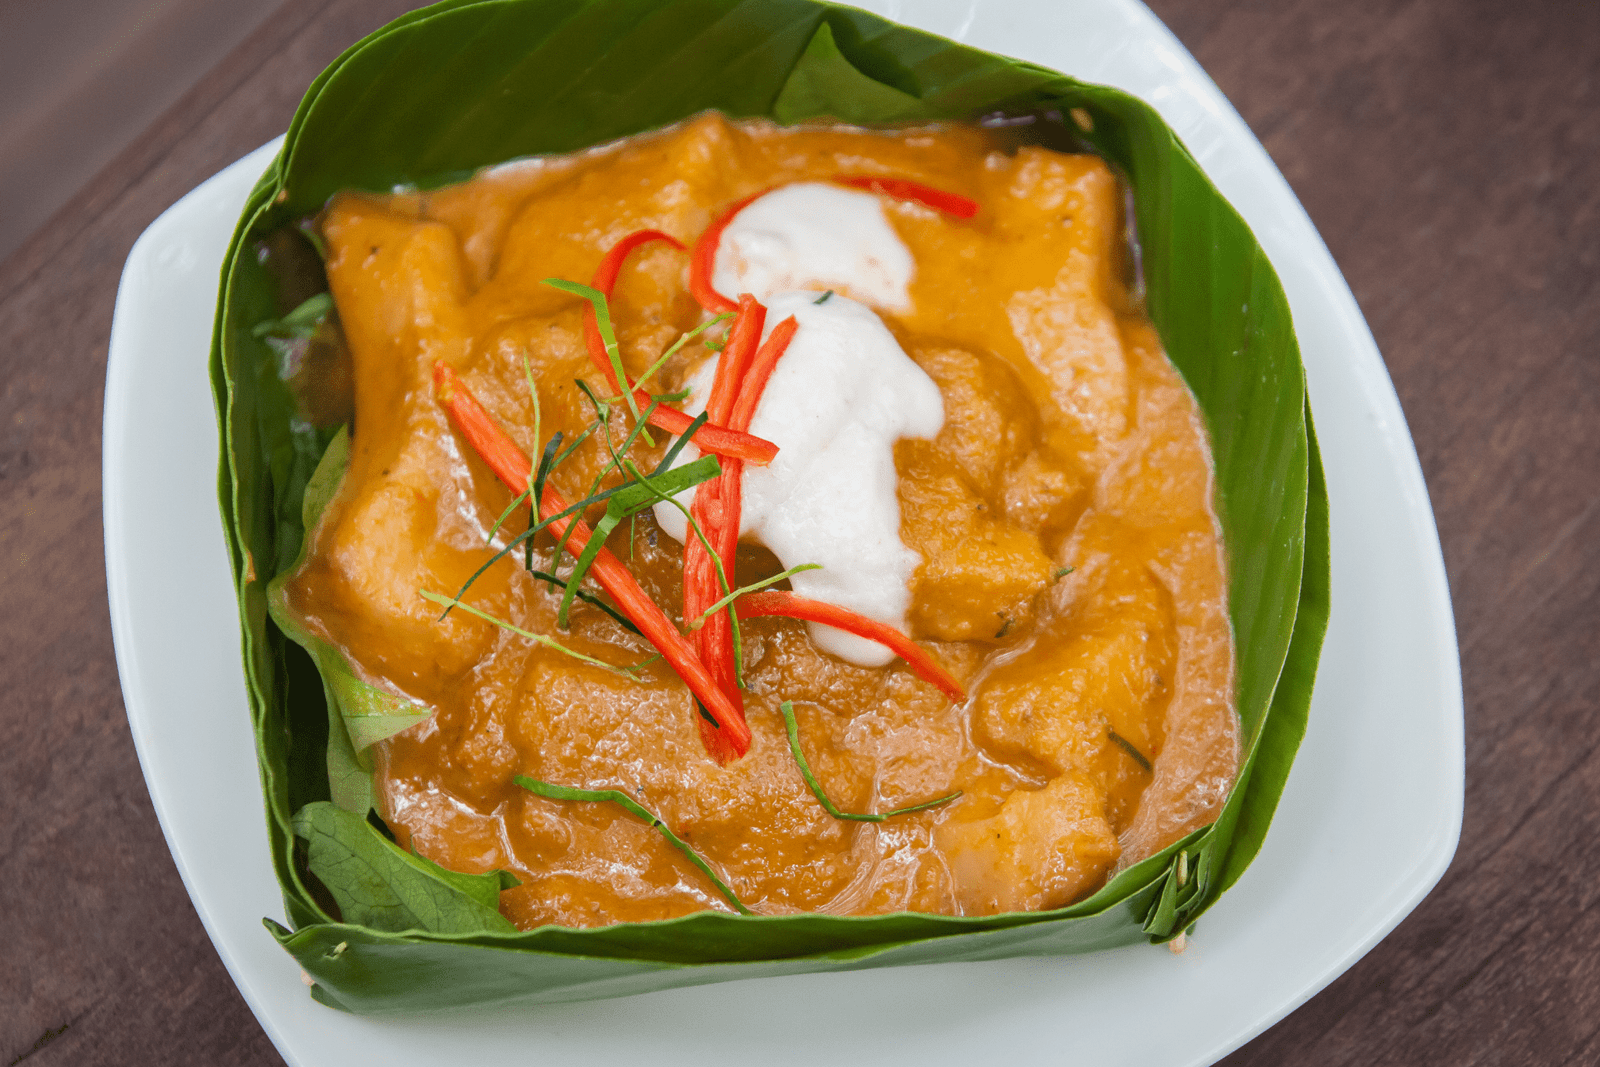 Savouring the Flavour of Cambodia’s Signature Fish Amok Dish